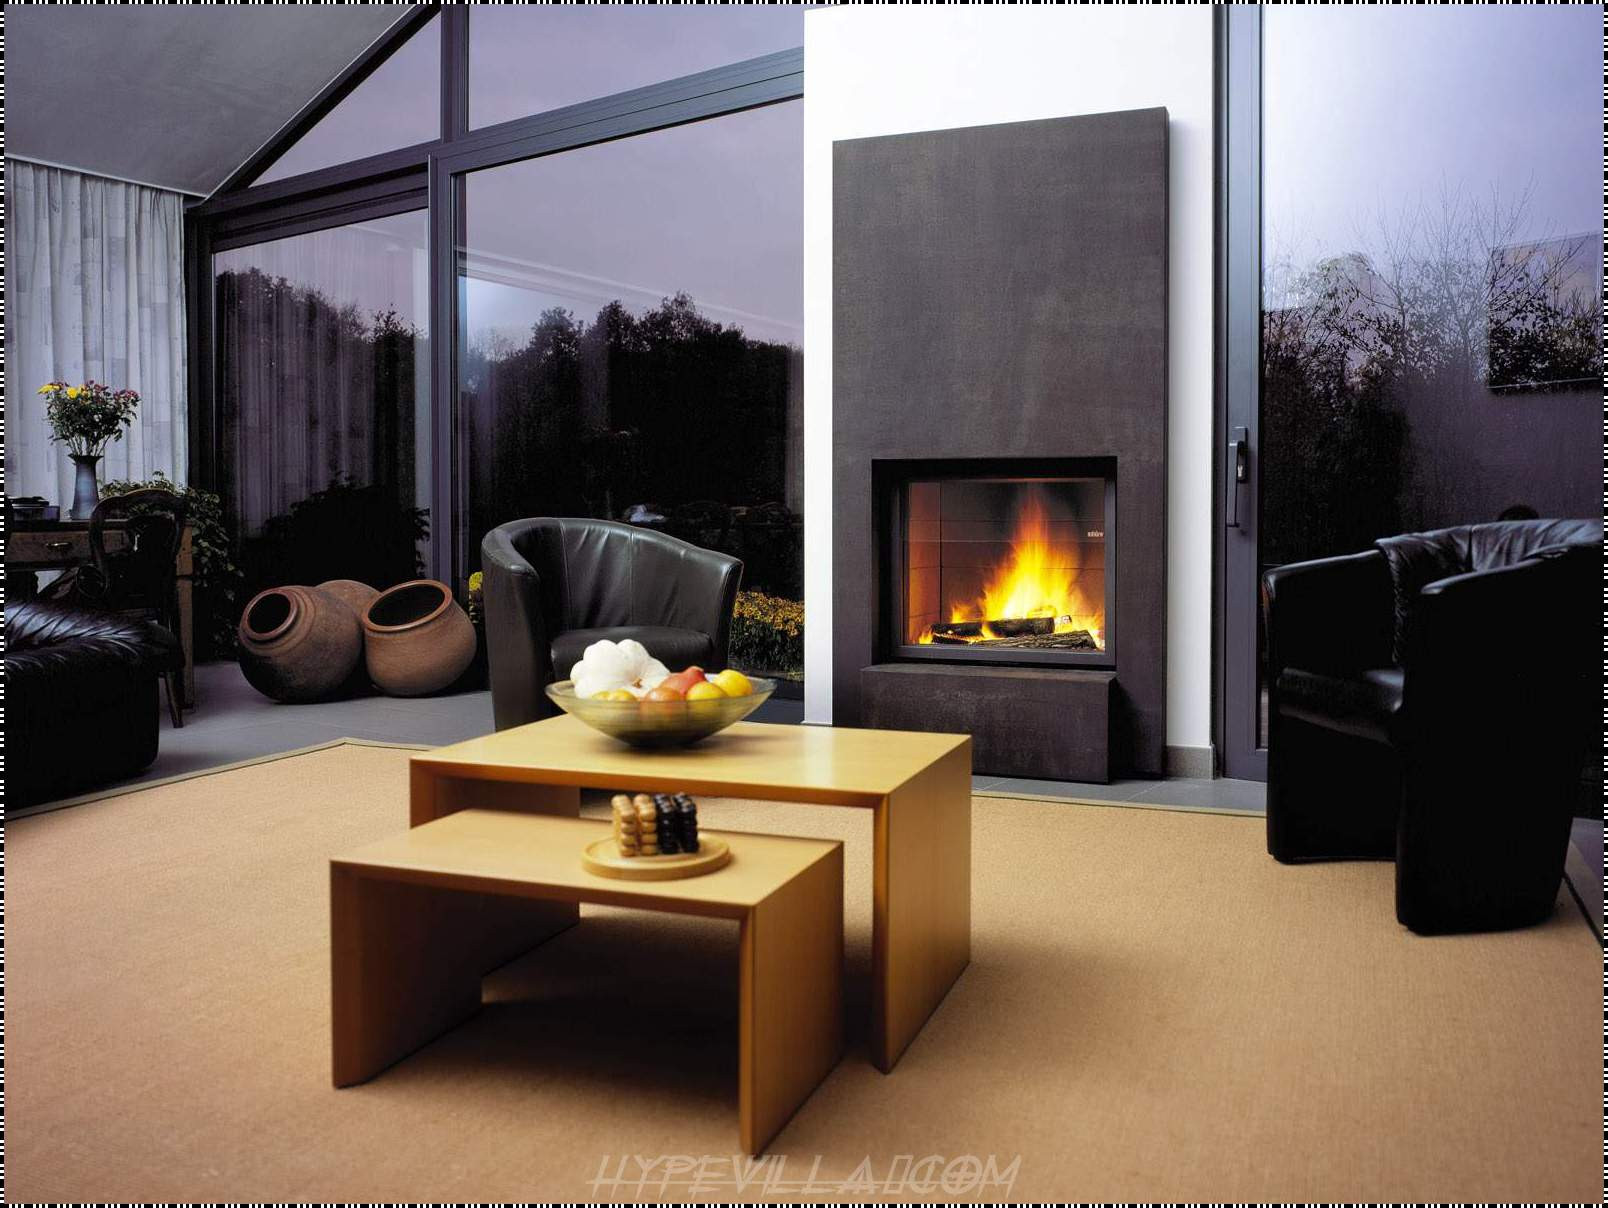 Best ideas about Fireplace Design Ideas
. Save or Pin 25 Hot Fireplace Design Ideas For Your House Now.